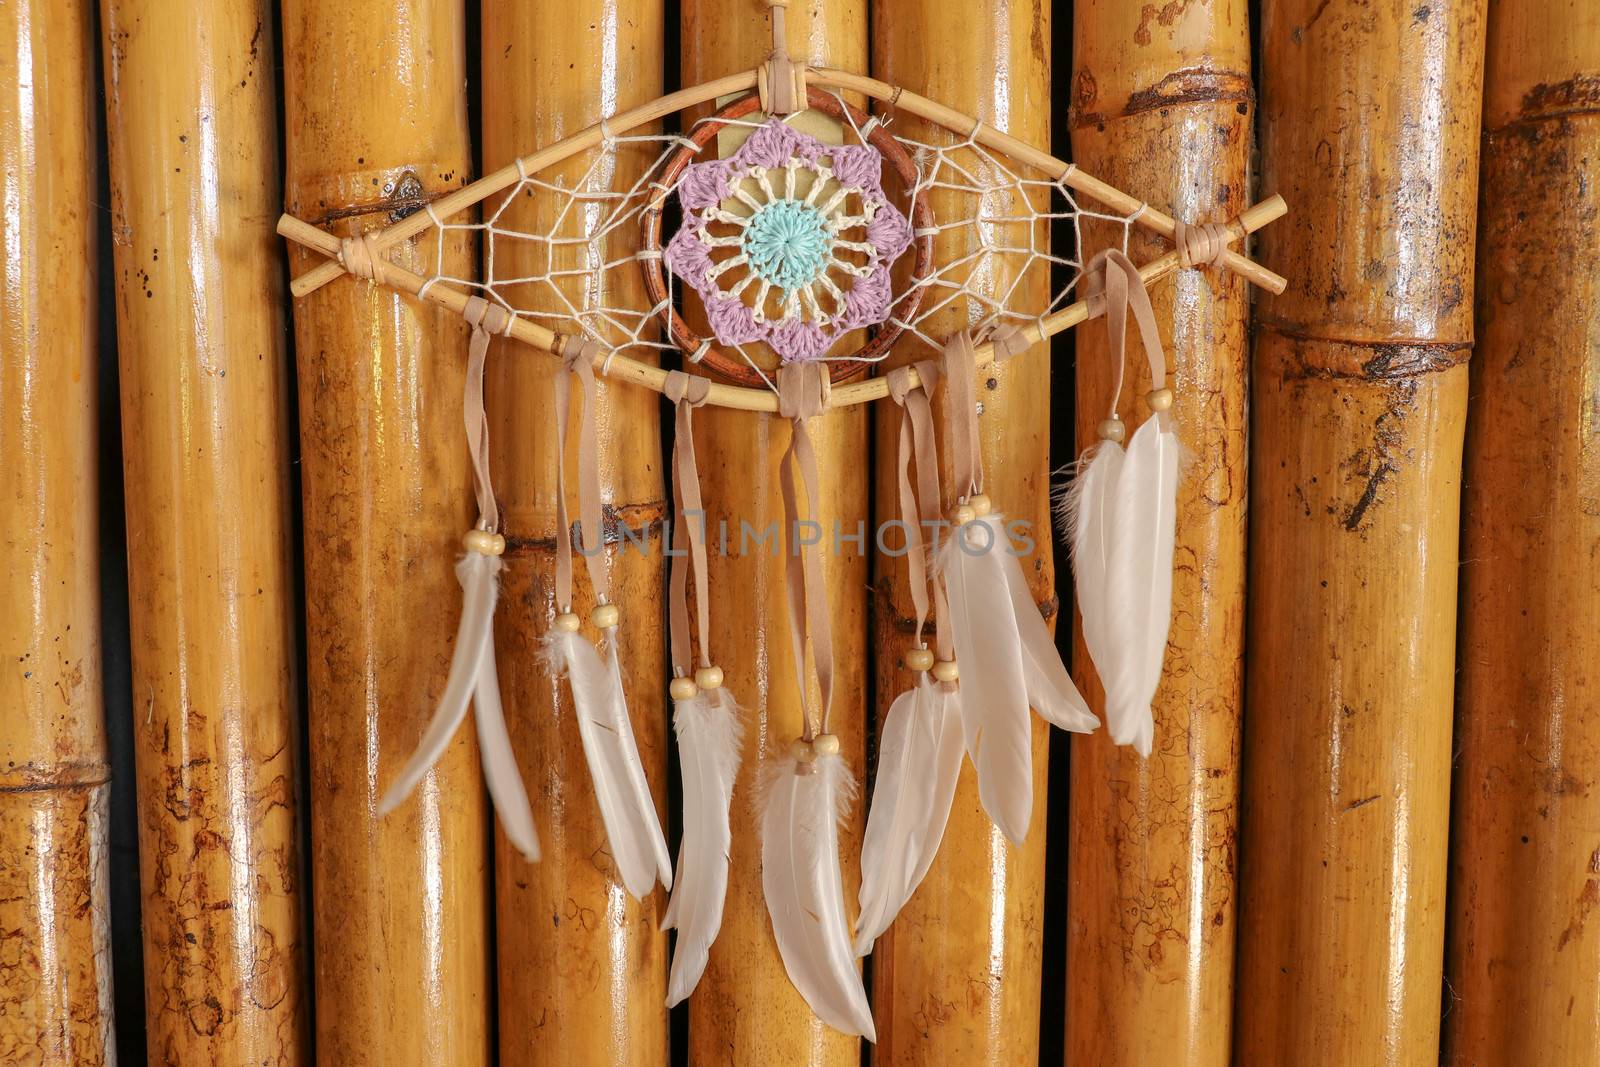 god eye of providence dreamcatcher with white feathers on a wodd by Sanatana2008